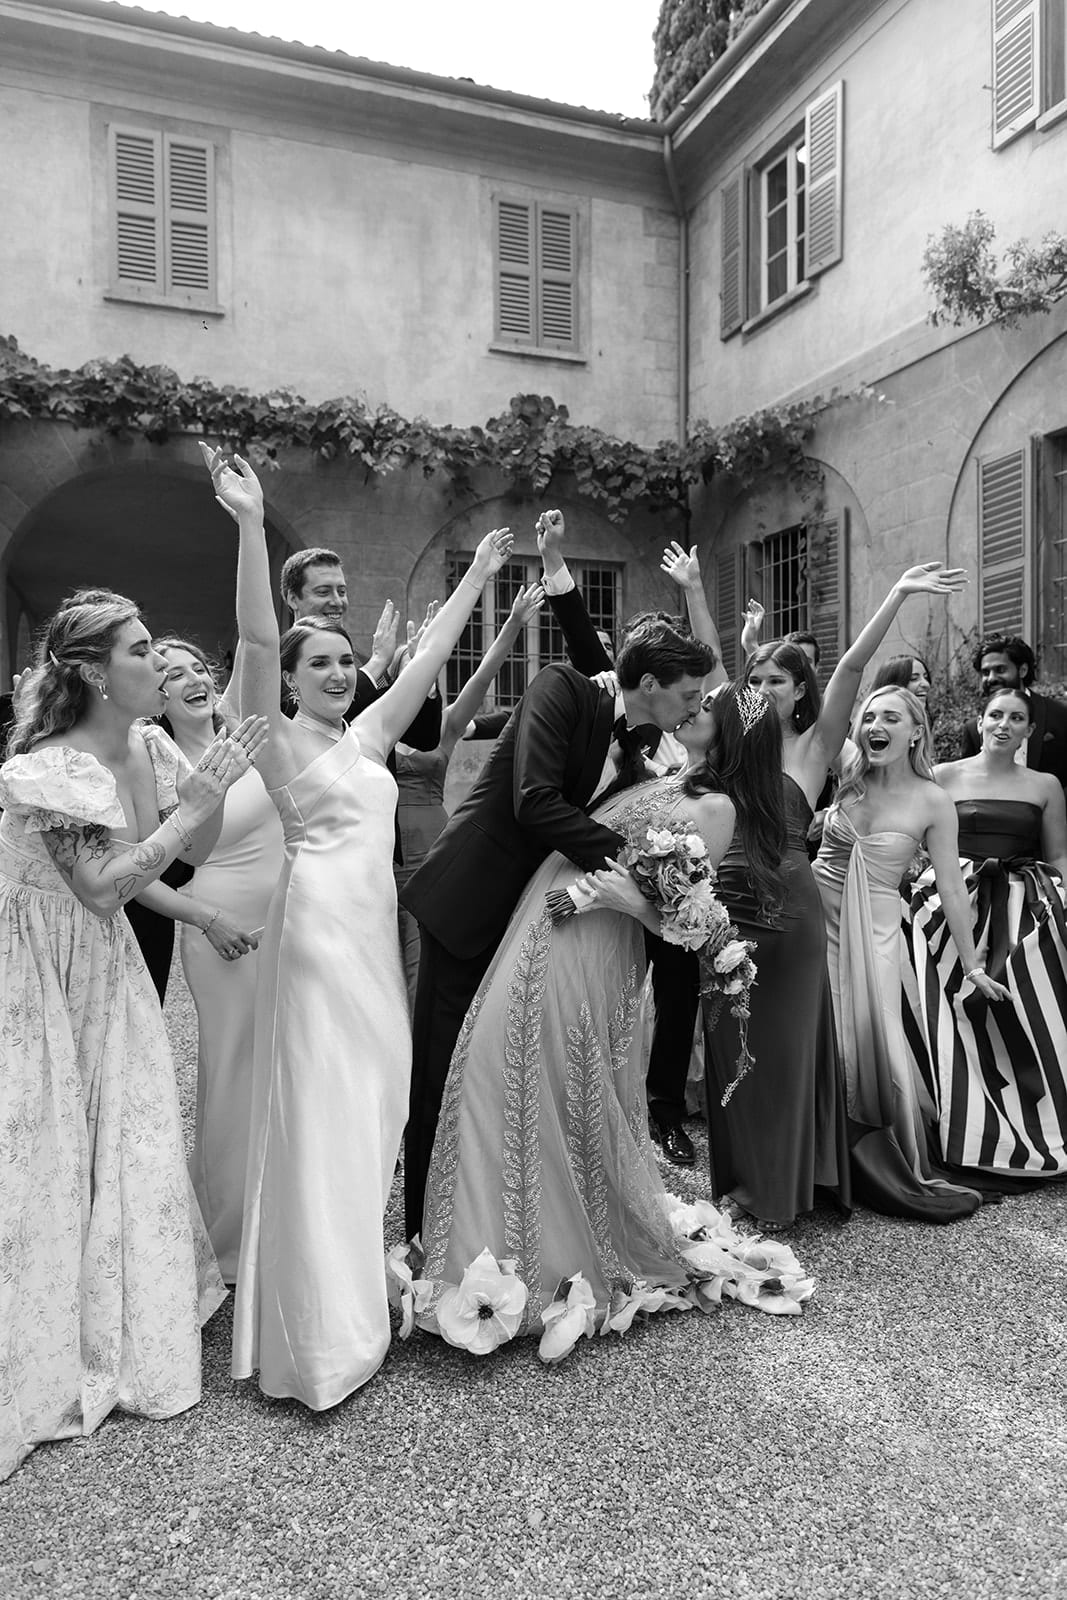 Groom kisses bride while bridal party cheers at a Lake Como wedding villa